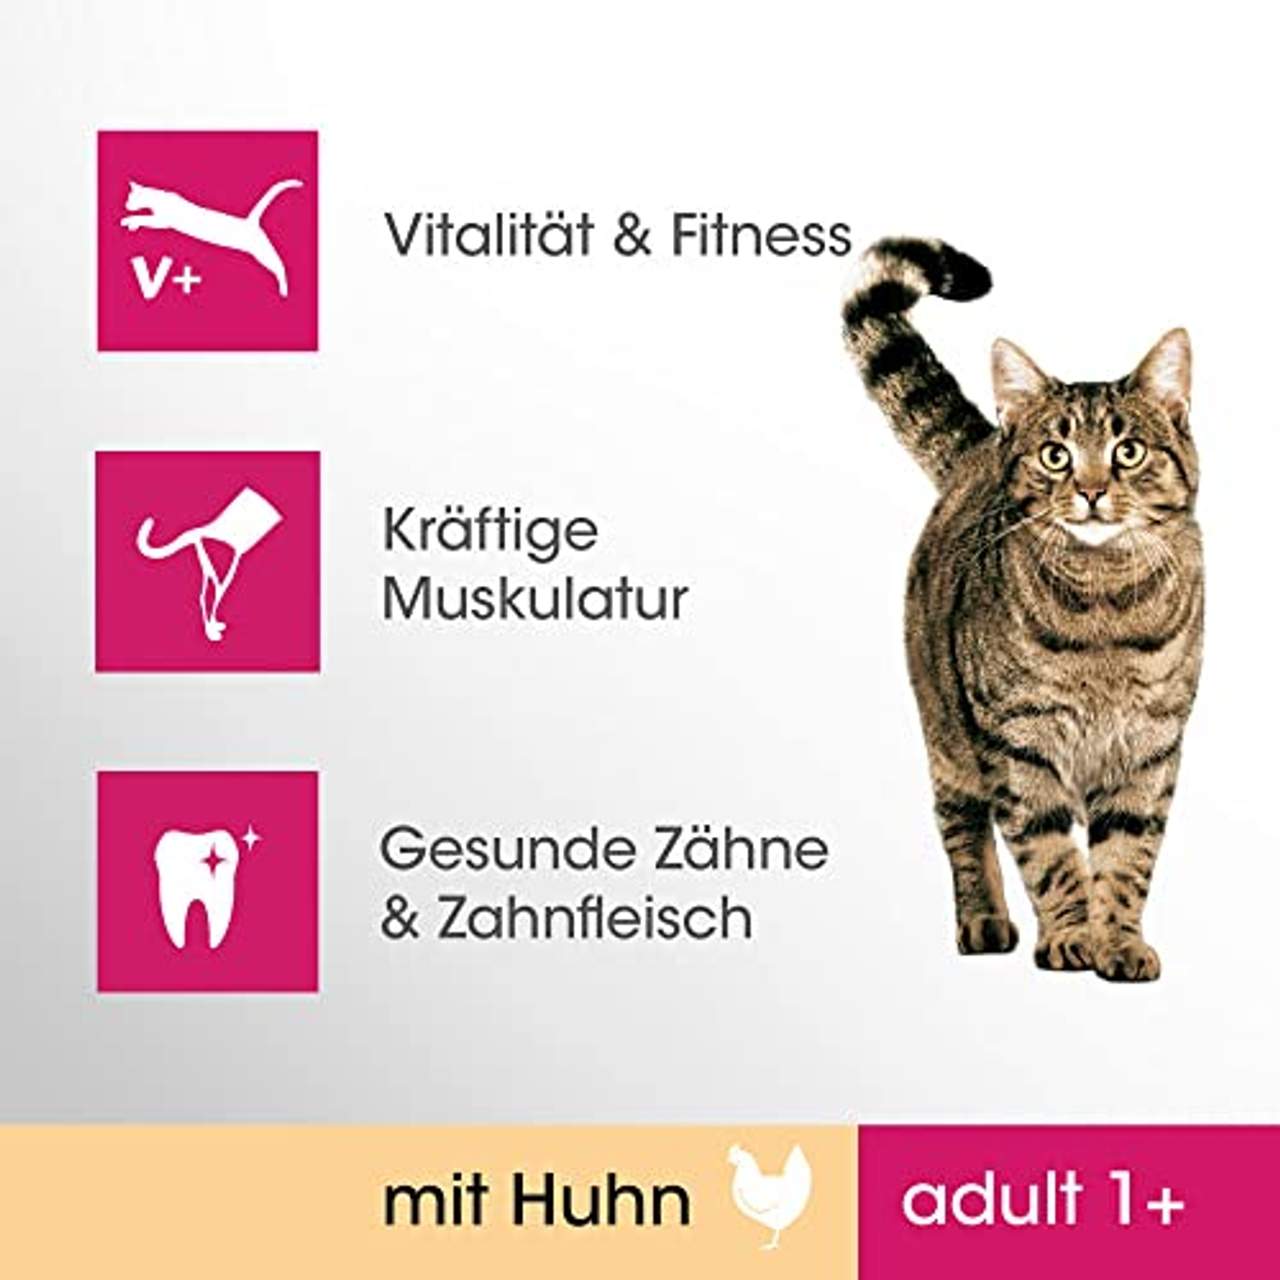 PERFECT FIT Katze Adult Huhn 7 KG NUR FH+Ecommerce 40 X 1 BTL